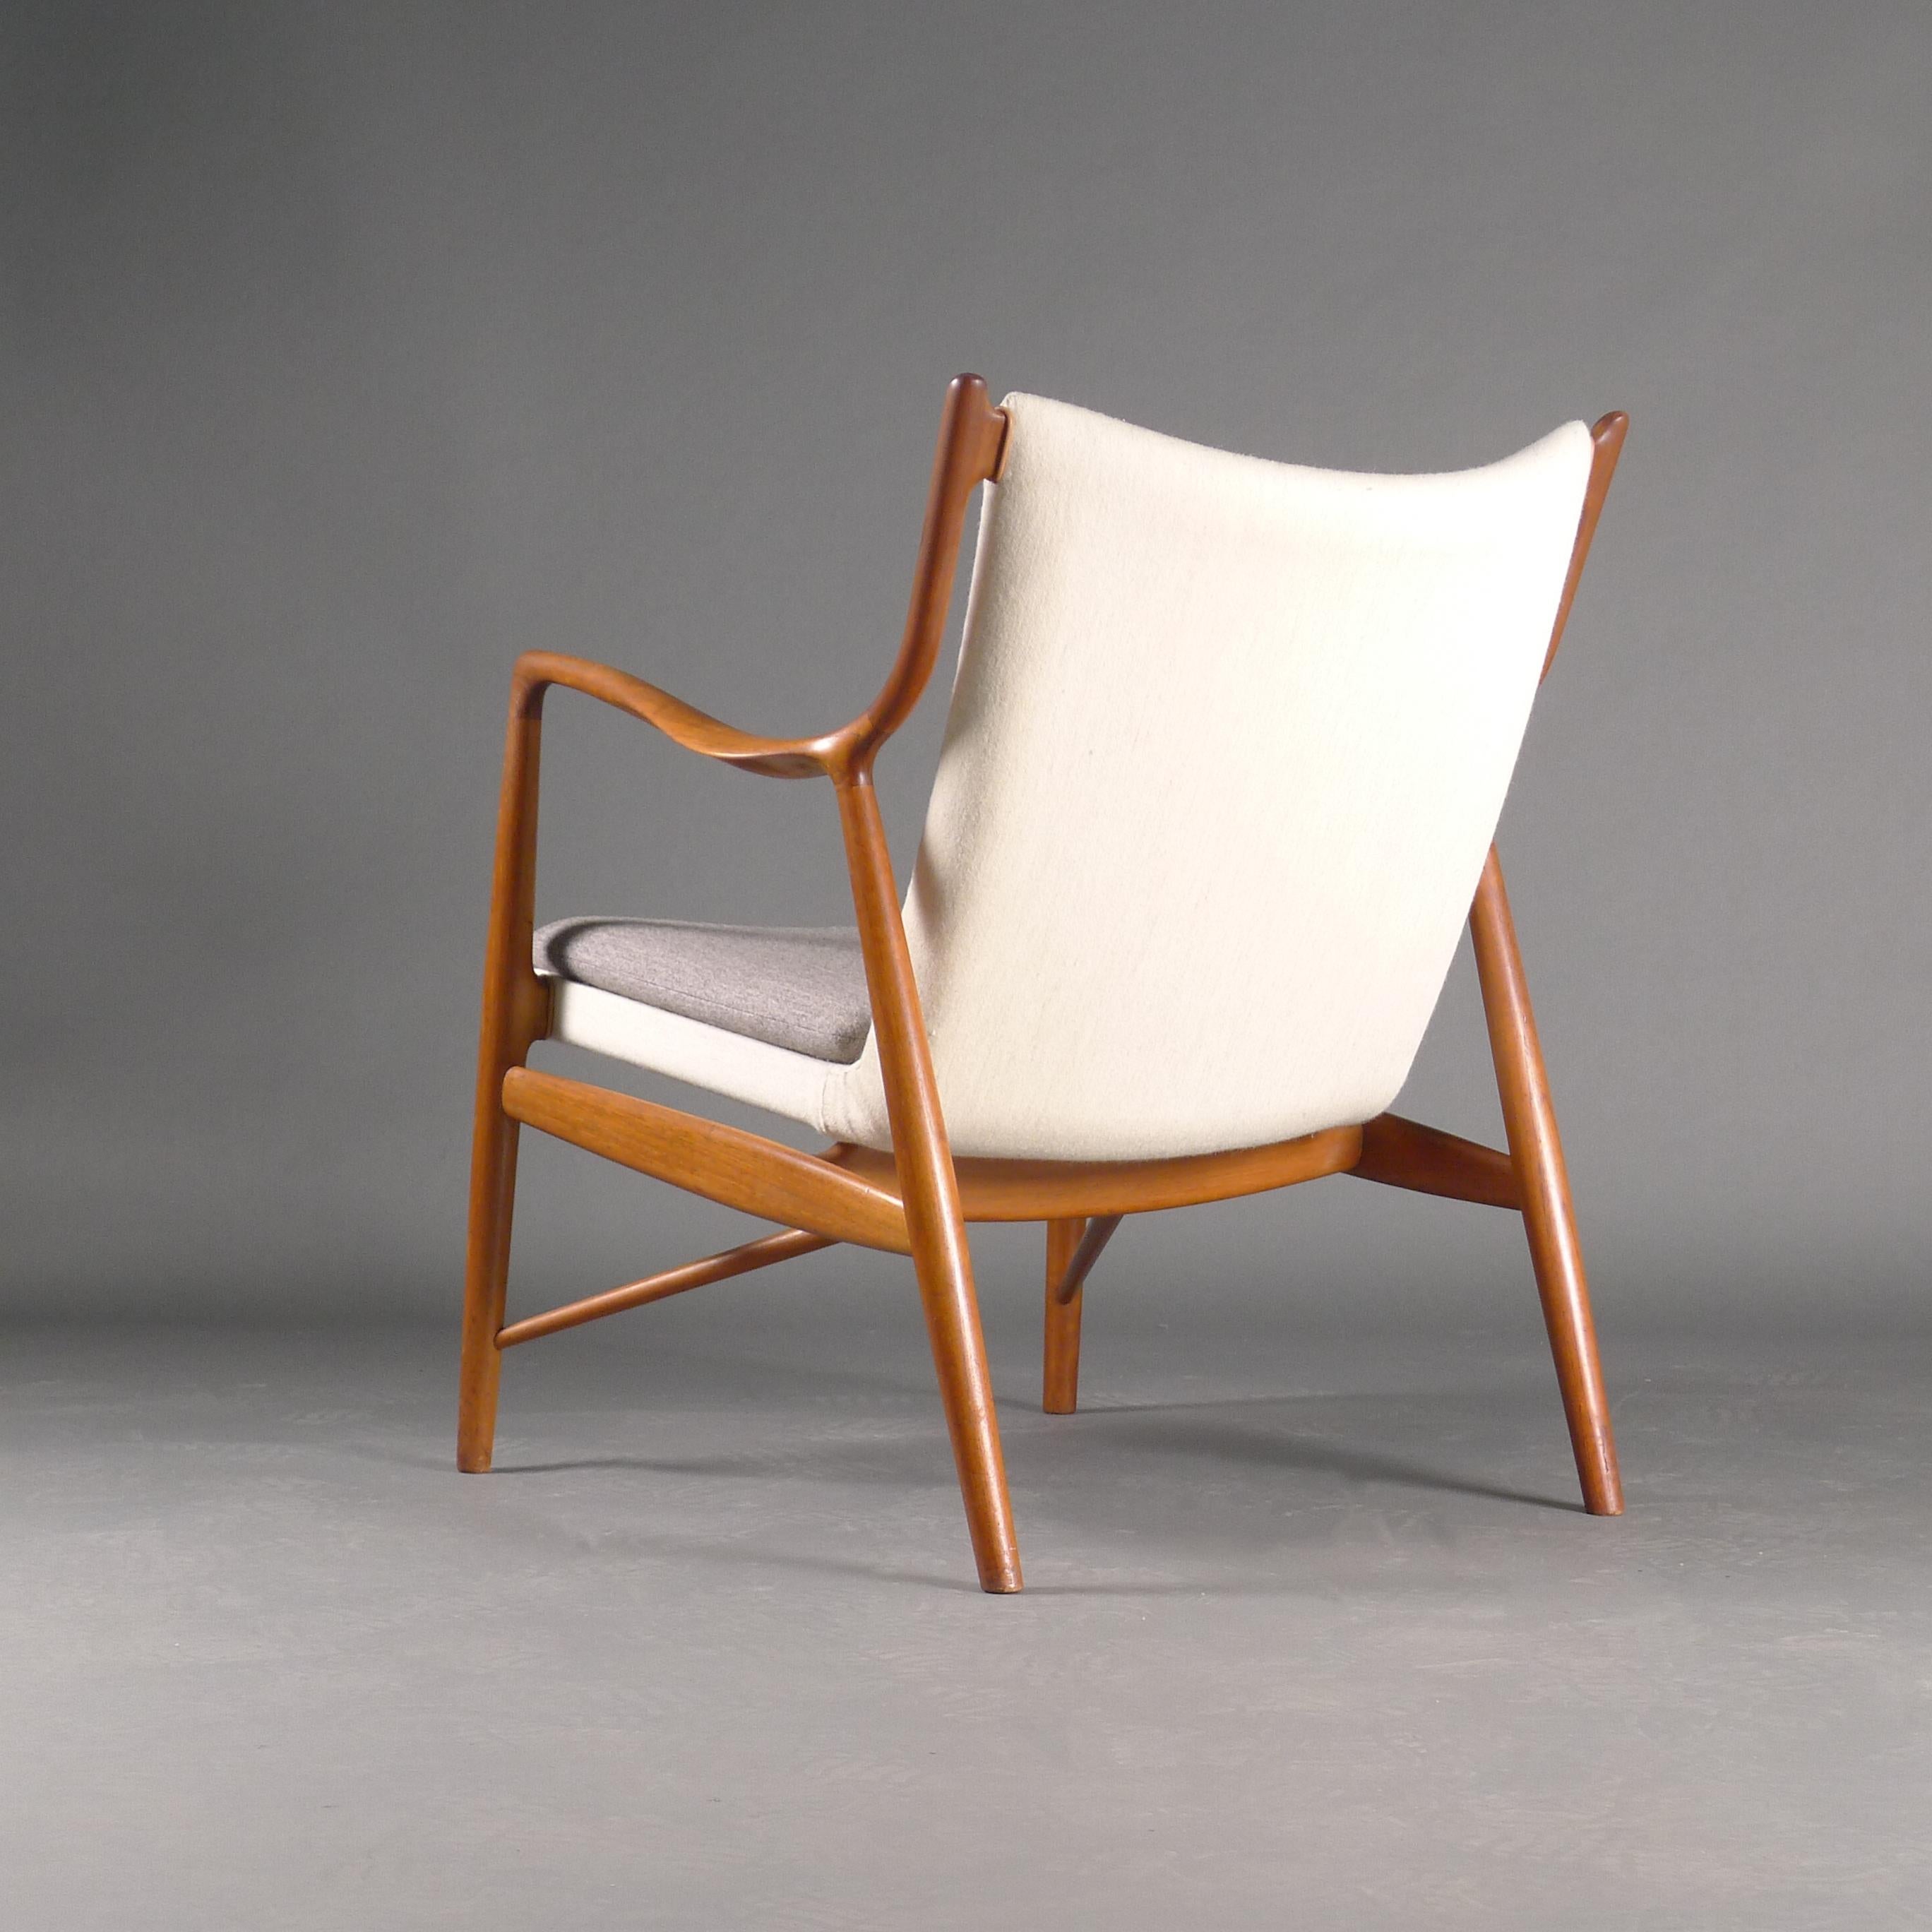 Upholstery Model NV45 Easy Chair, Designed by Finn Juhl, Made by Niels Vodder, 1940s For Sale